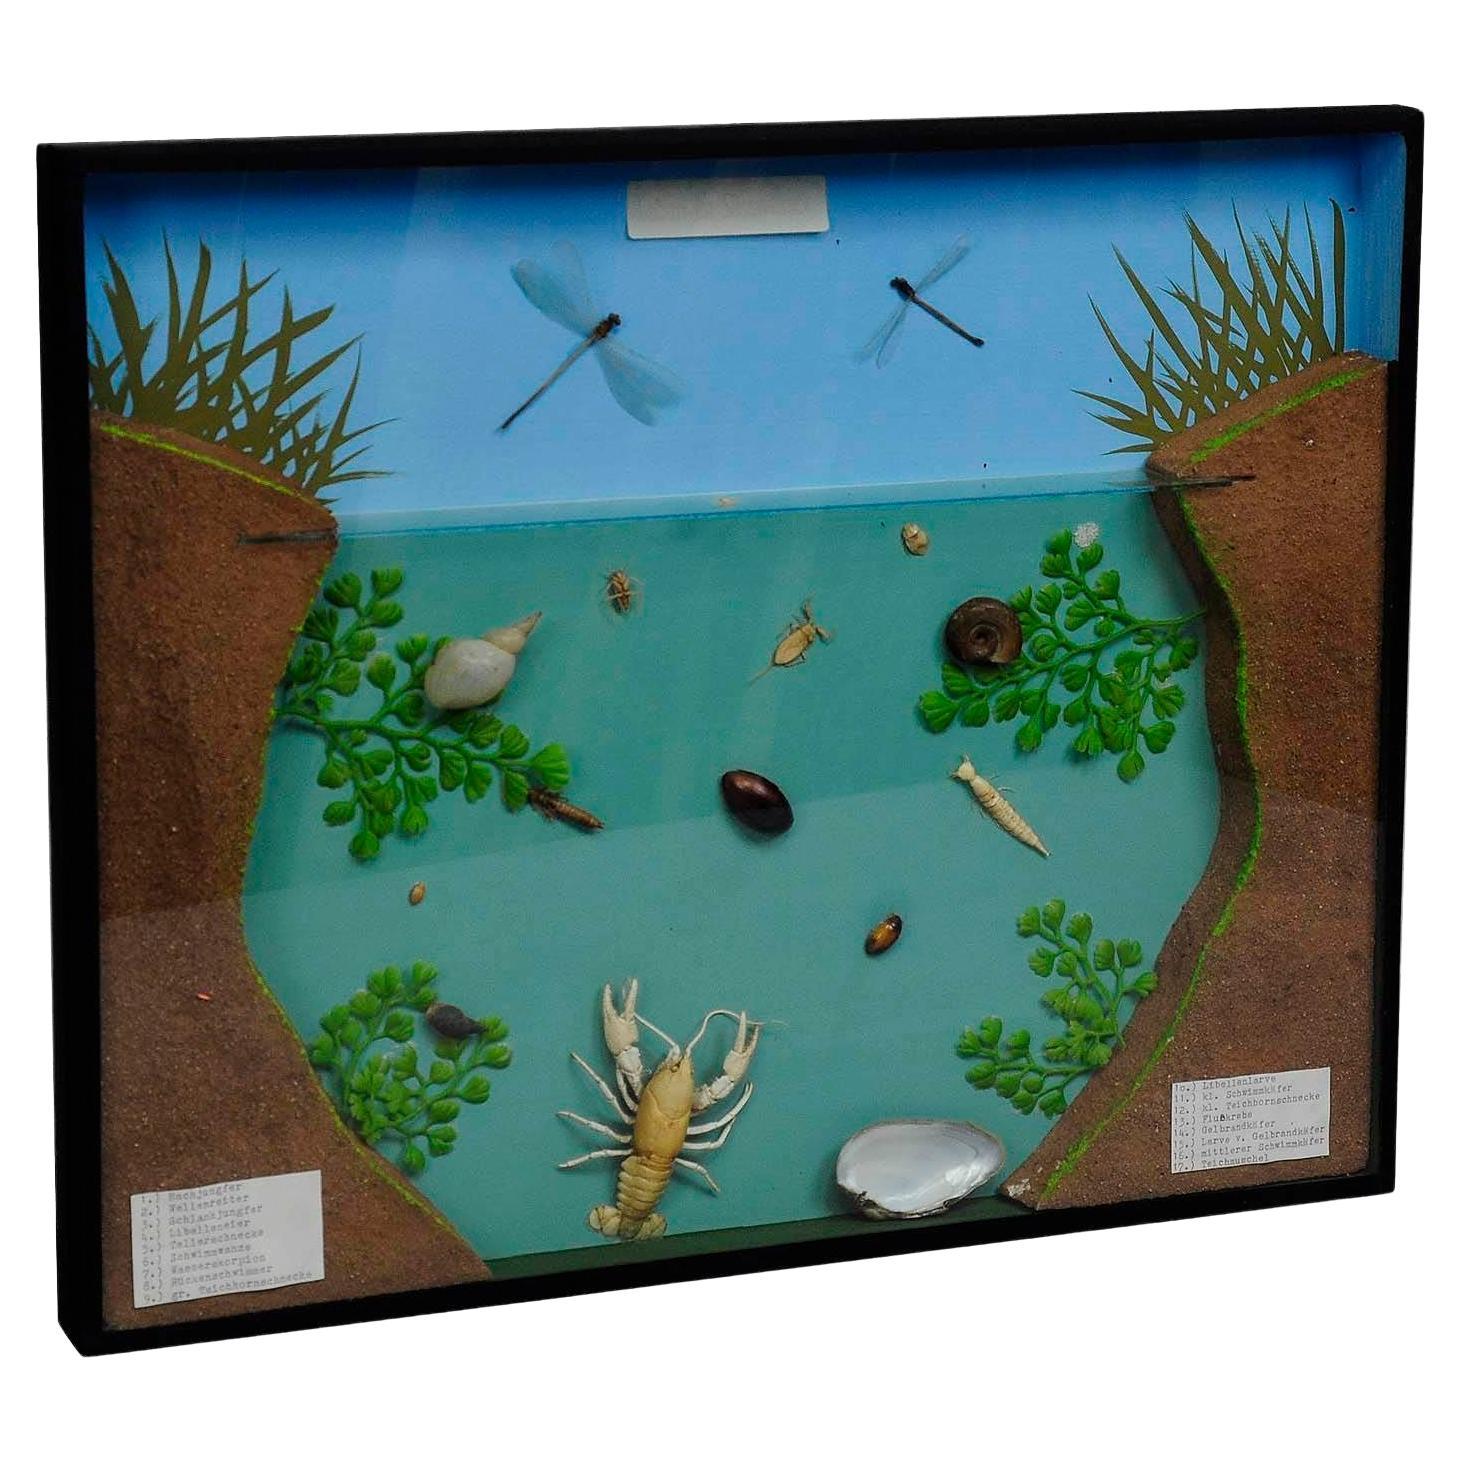 Great Vintage School Teaching Display of the Fresh Water Habitat (exposition sur l'habitat d'eau douce)